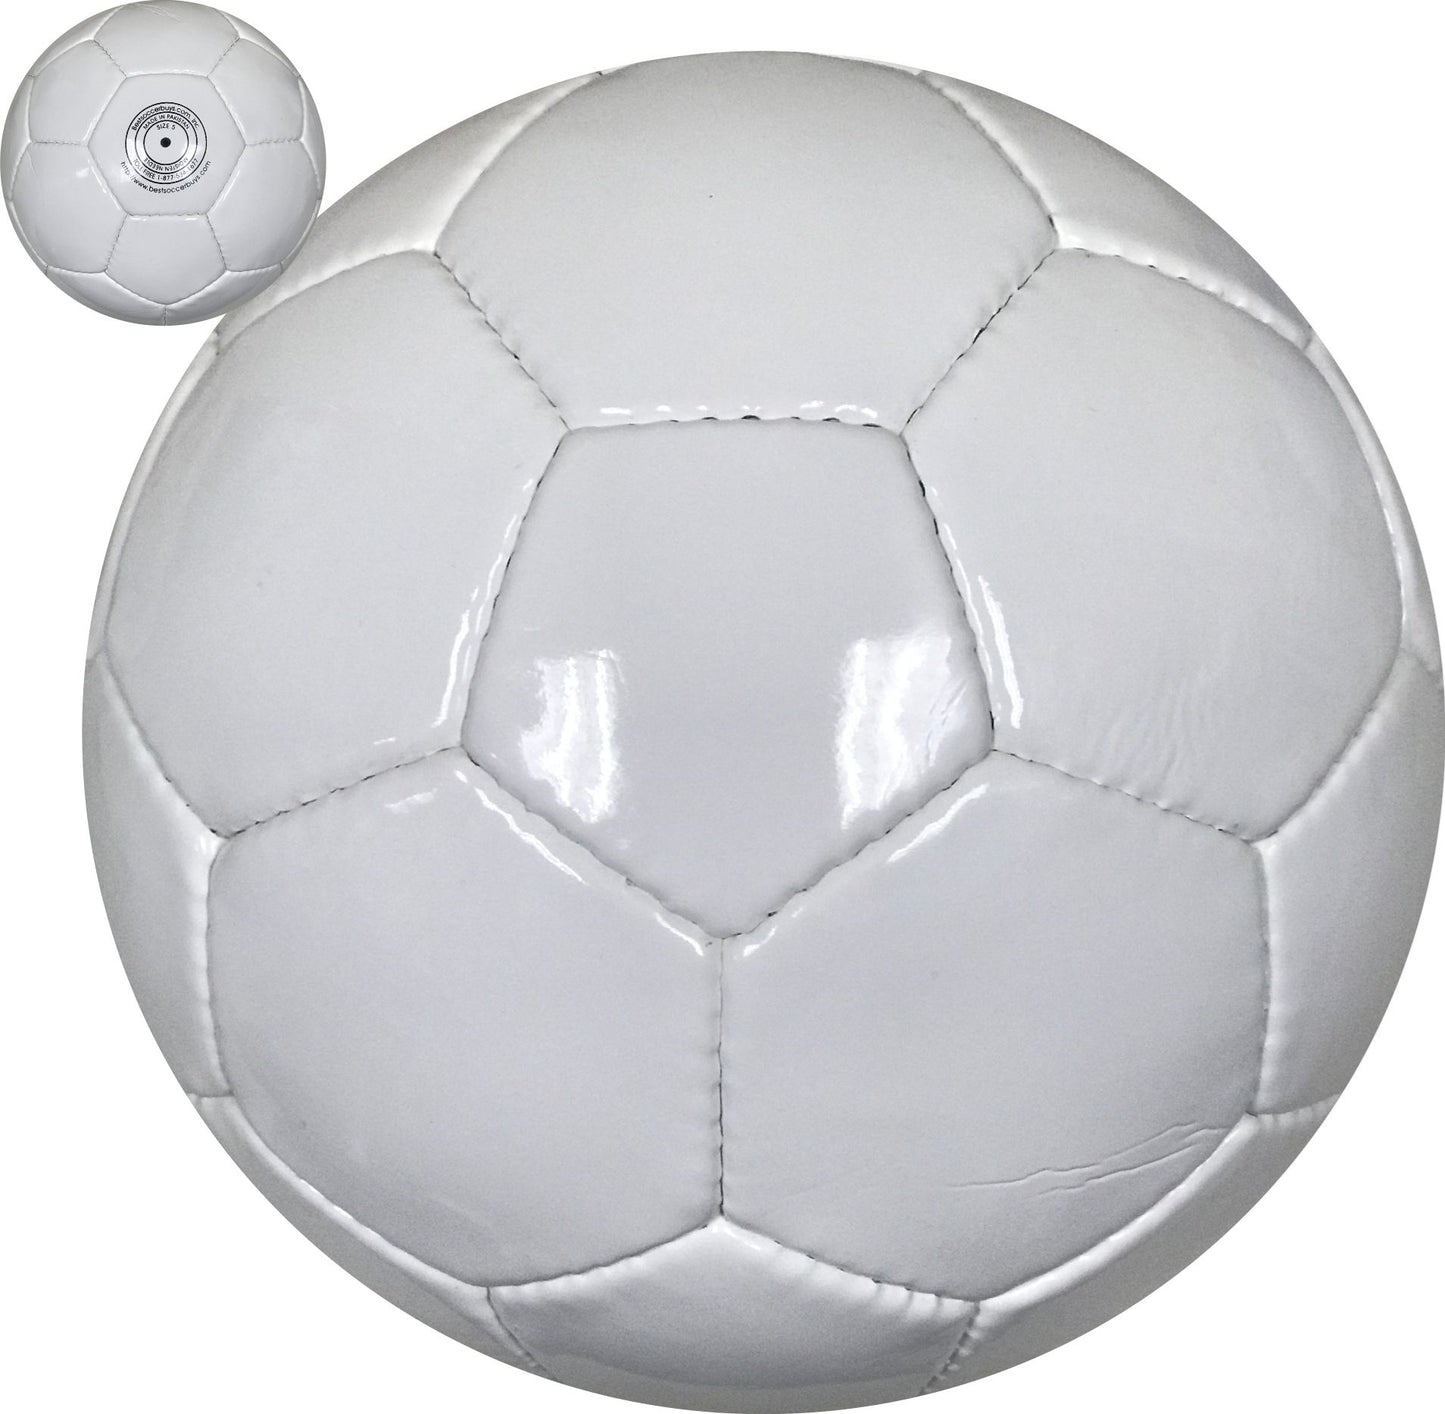 All White Soccer Ball Size 5 Promo Ball Plain